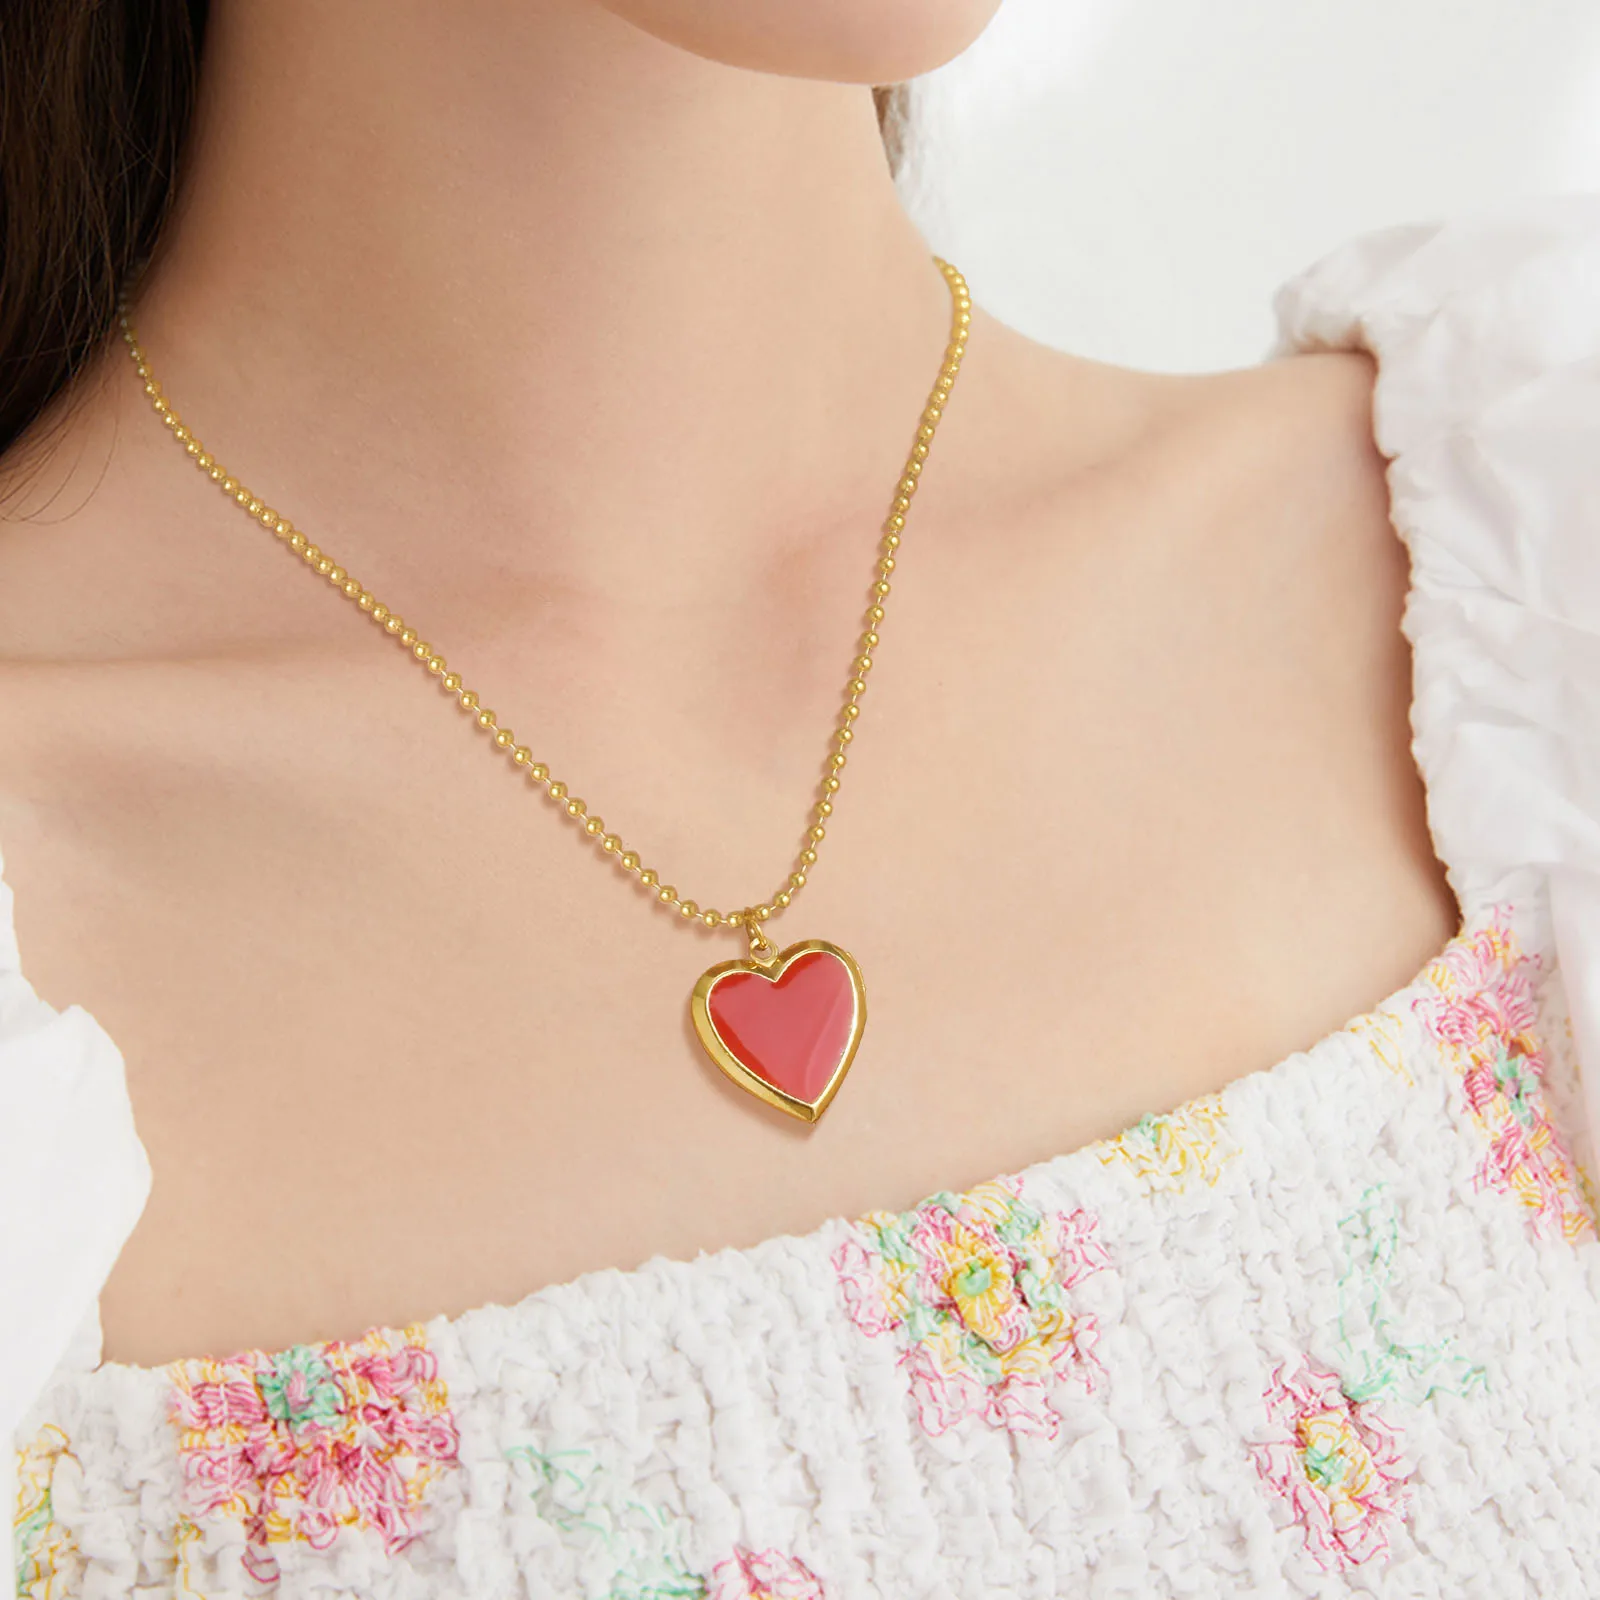 Rose Gold Heart Locket Pendant Necklace